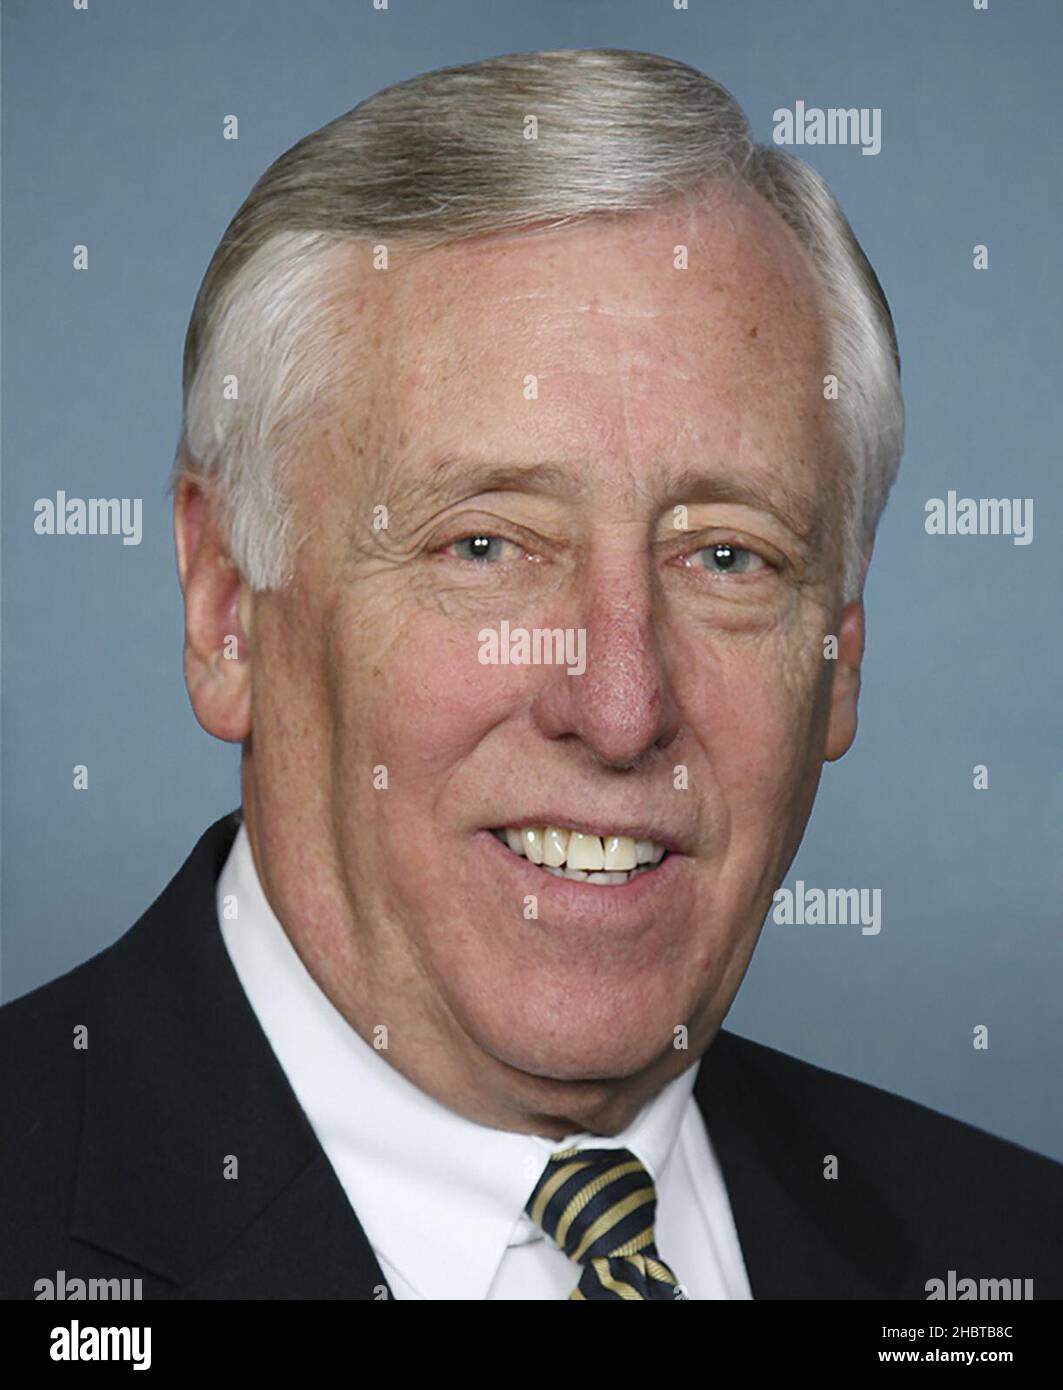 Congressional portrait of Steny Hoyer Stock Photo